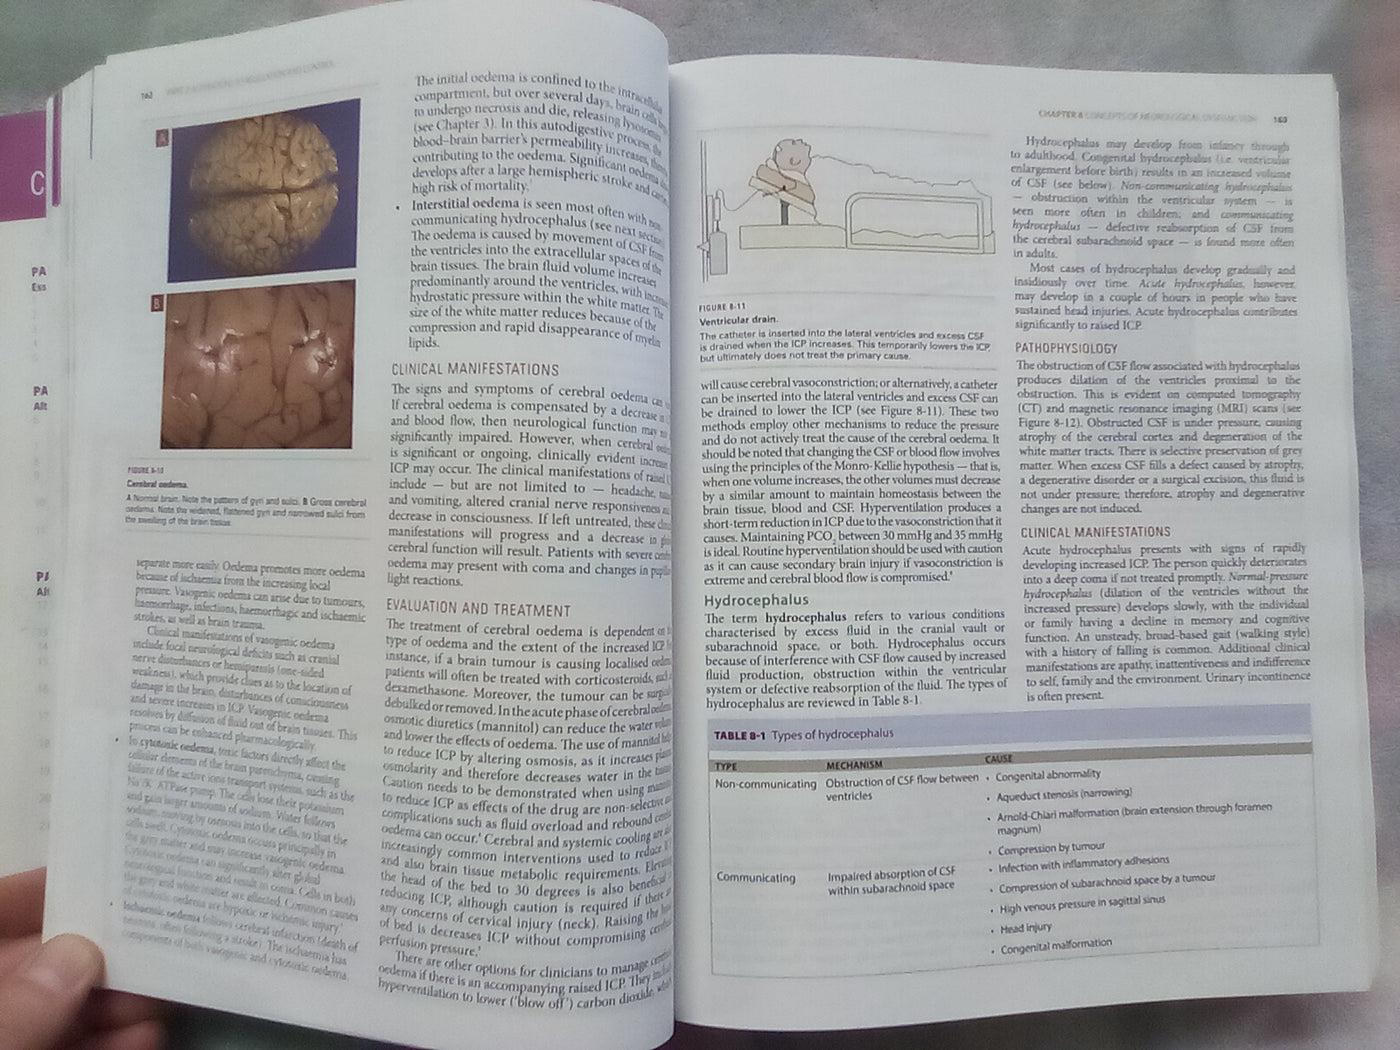 Understanding Pathophysiology 2 (2015 Edition) by Judy Craft & Christopher Gordon